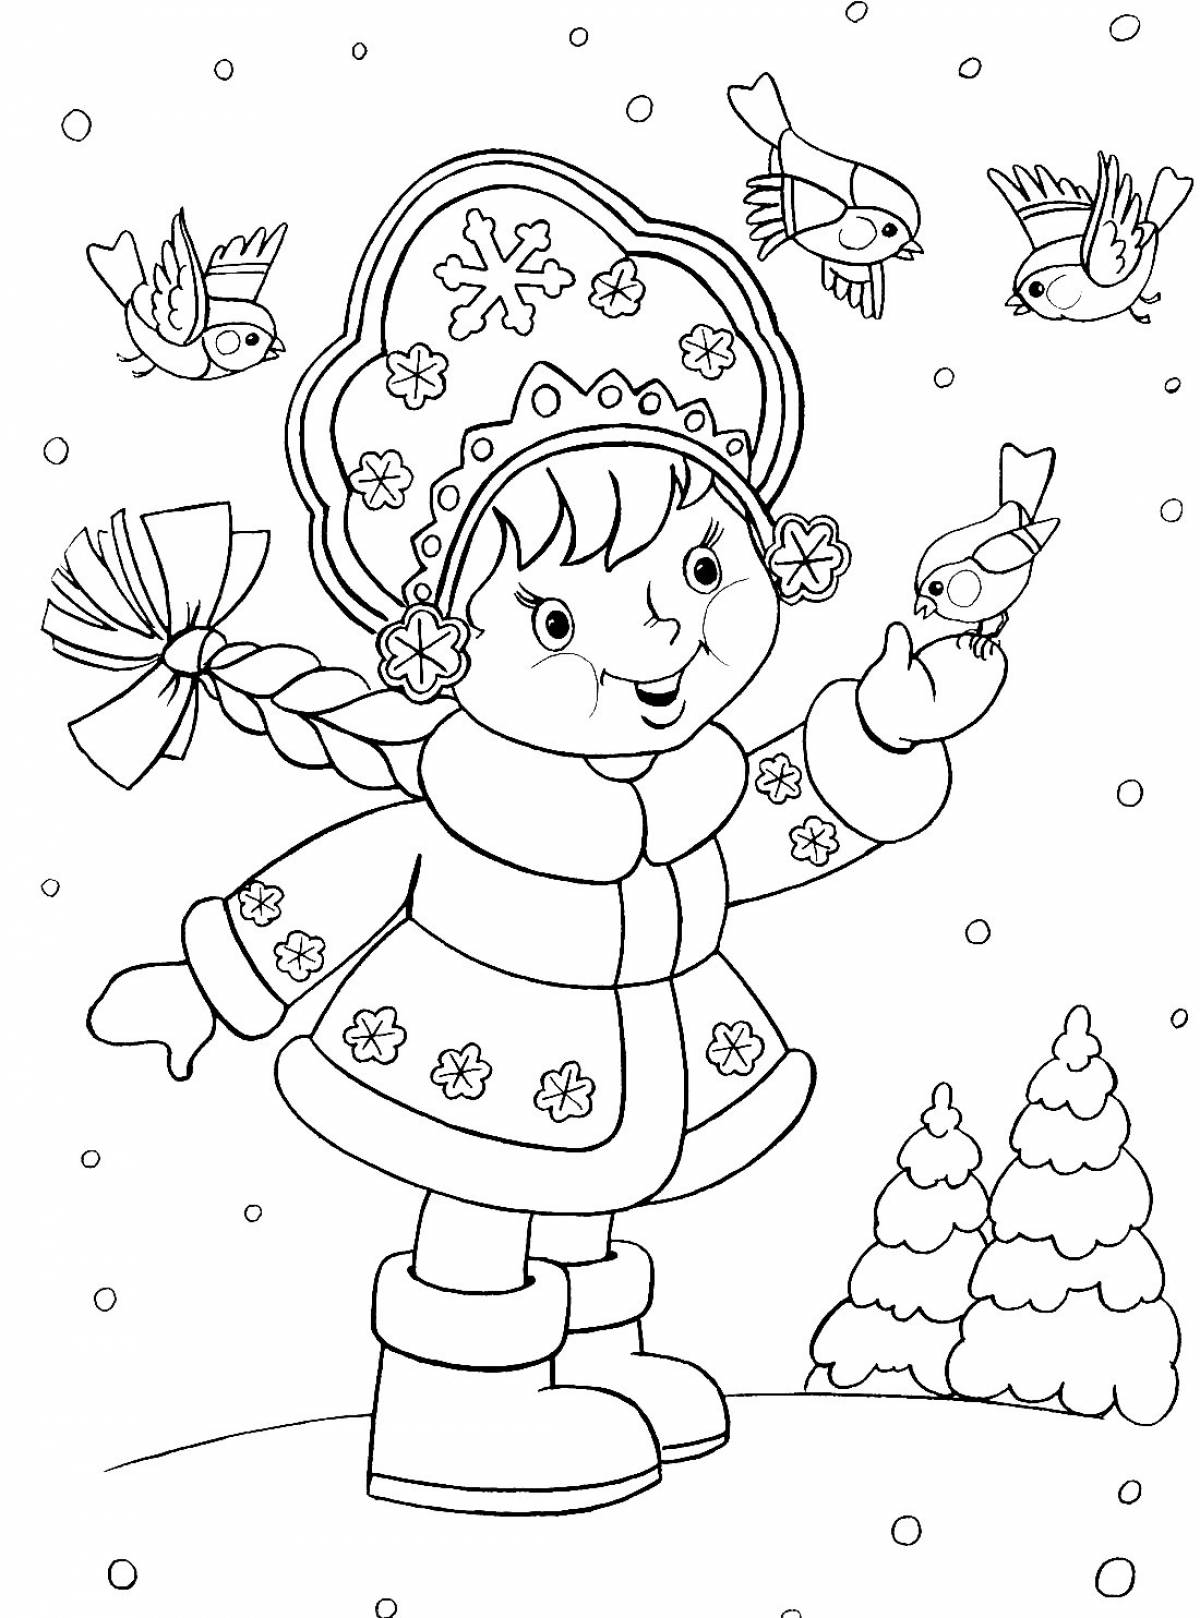 Snow Maiden for children 4 5 years old #4